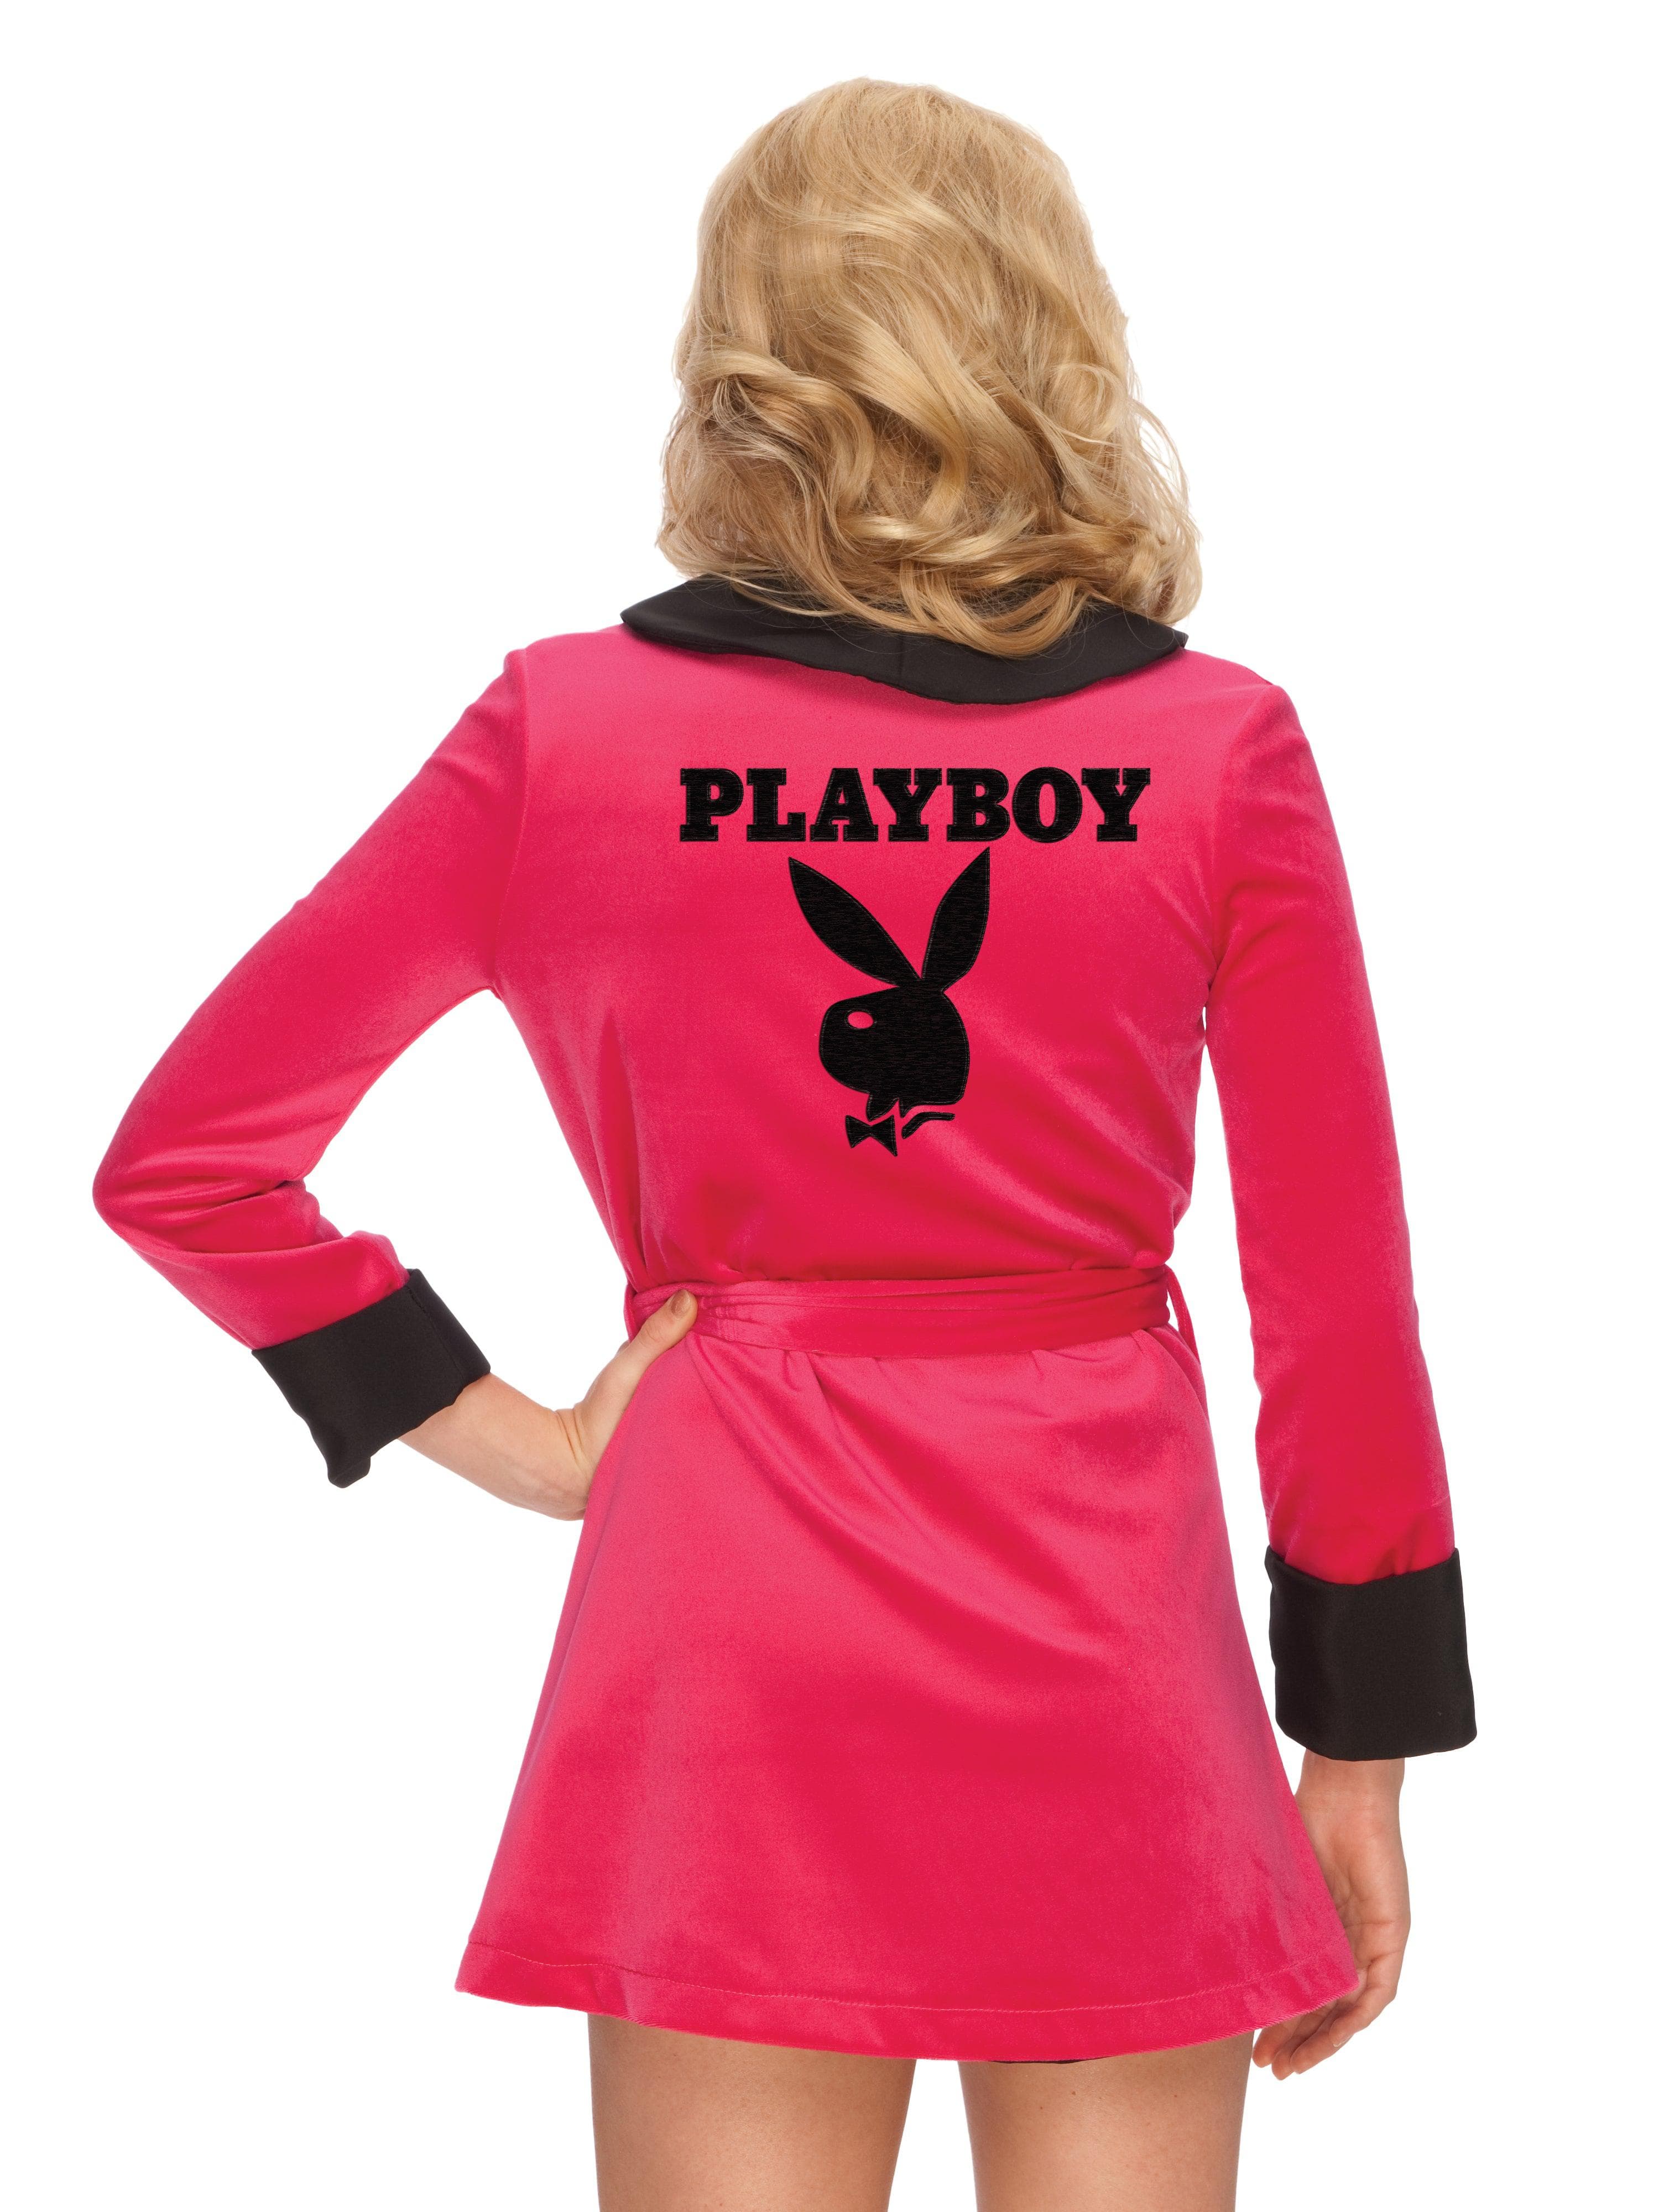 Women's Playboy Sexy Pink Smoking Jacket Costume - costumes.com